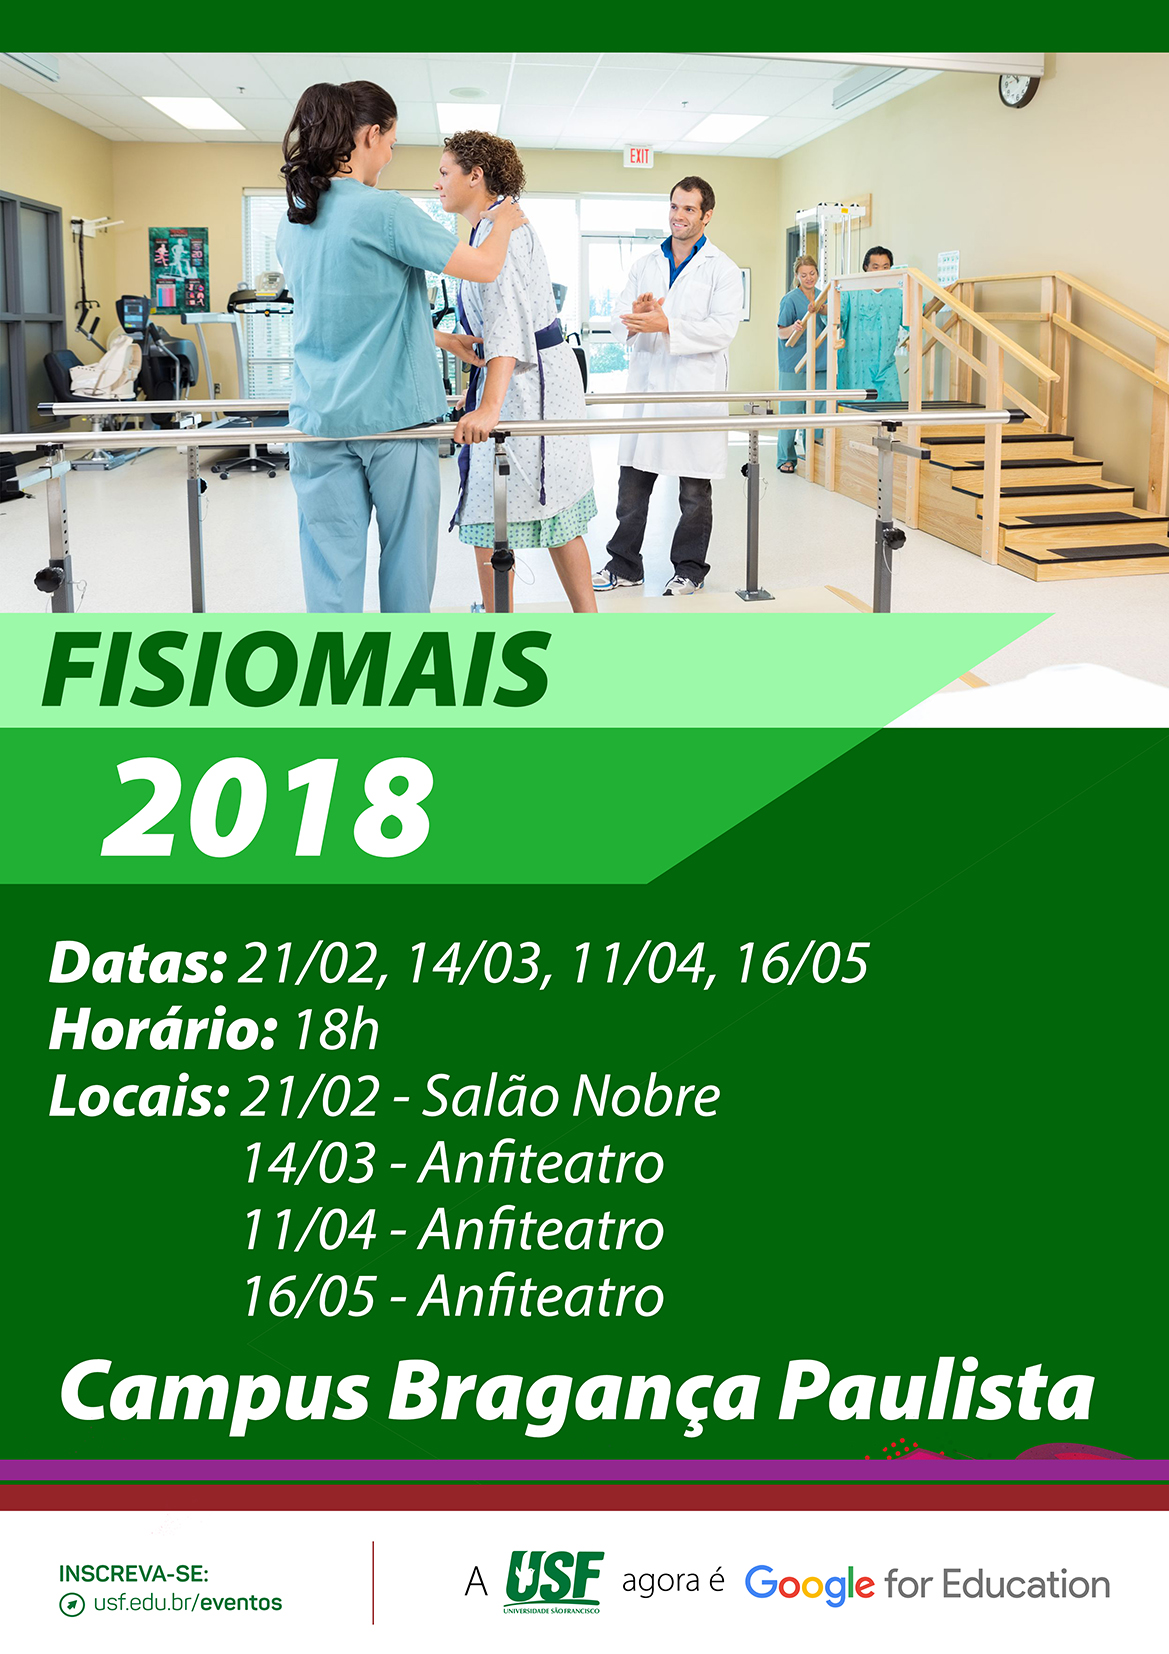 FISIOMAIS 2018 - Palestras de Fisioterapia 